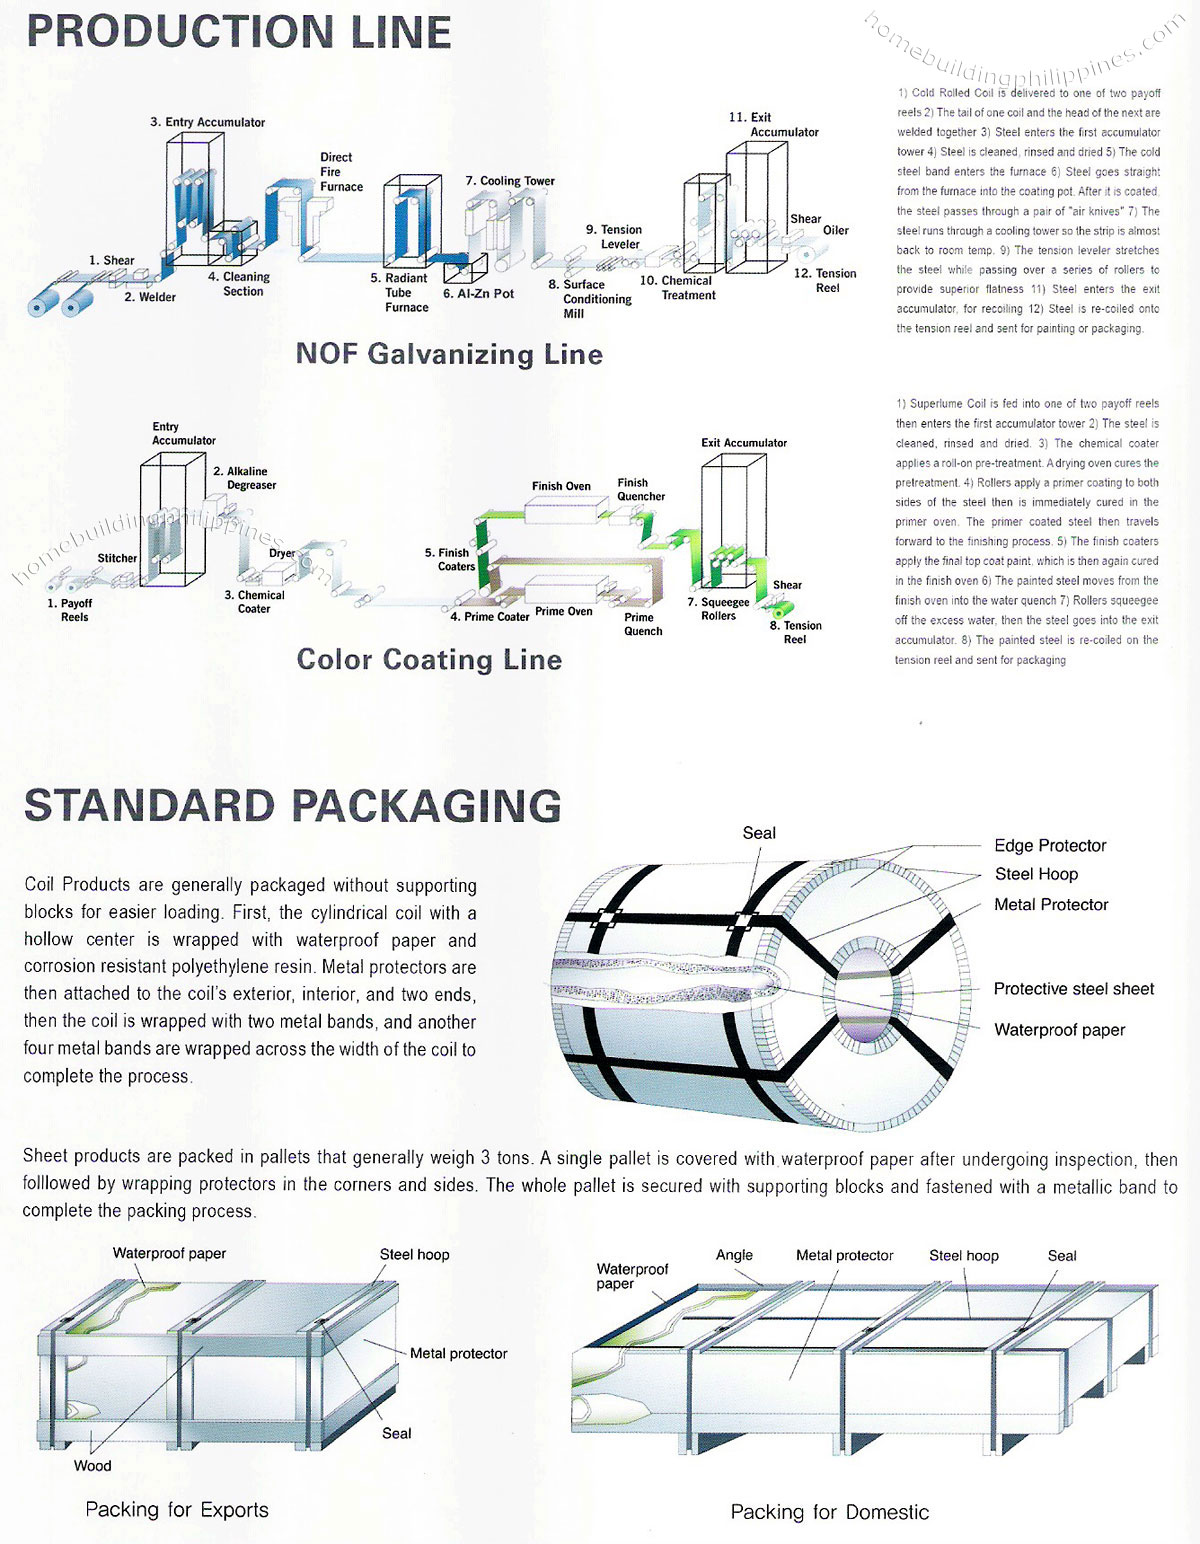 sonic steel industries production line standard packaging